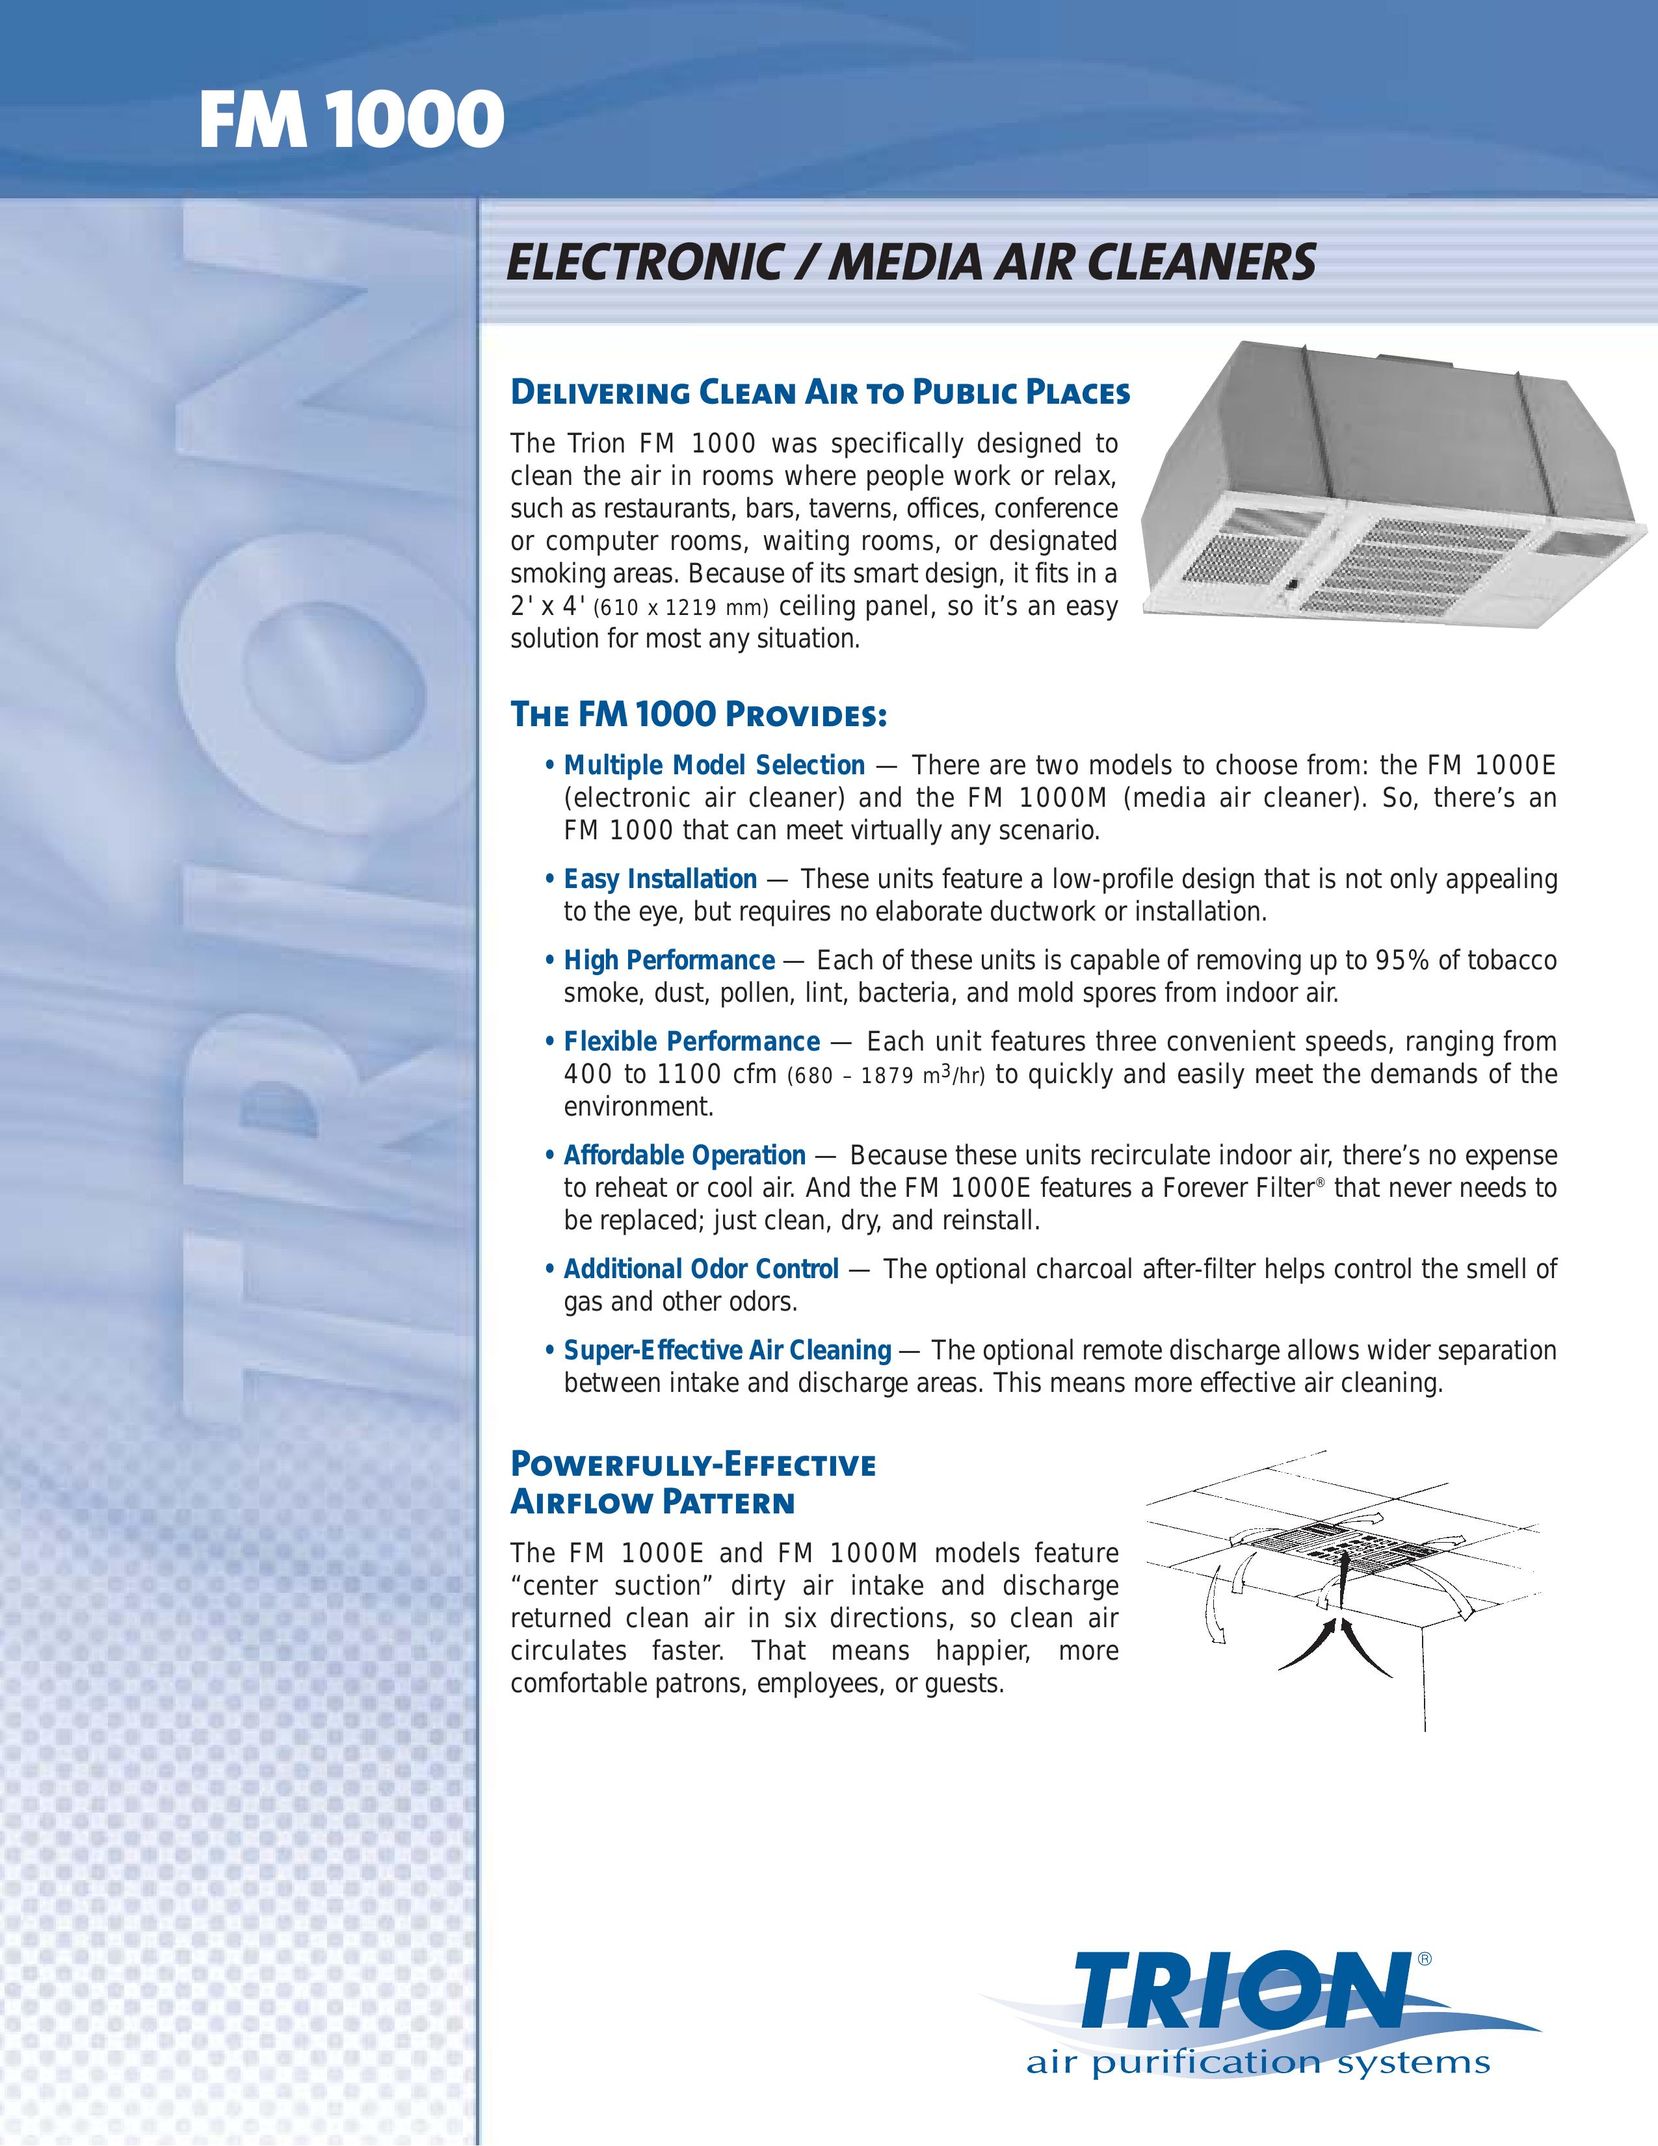 Trion FM 1000E Air Cleaner User Manual